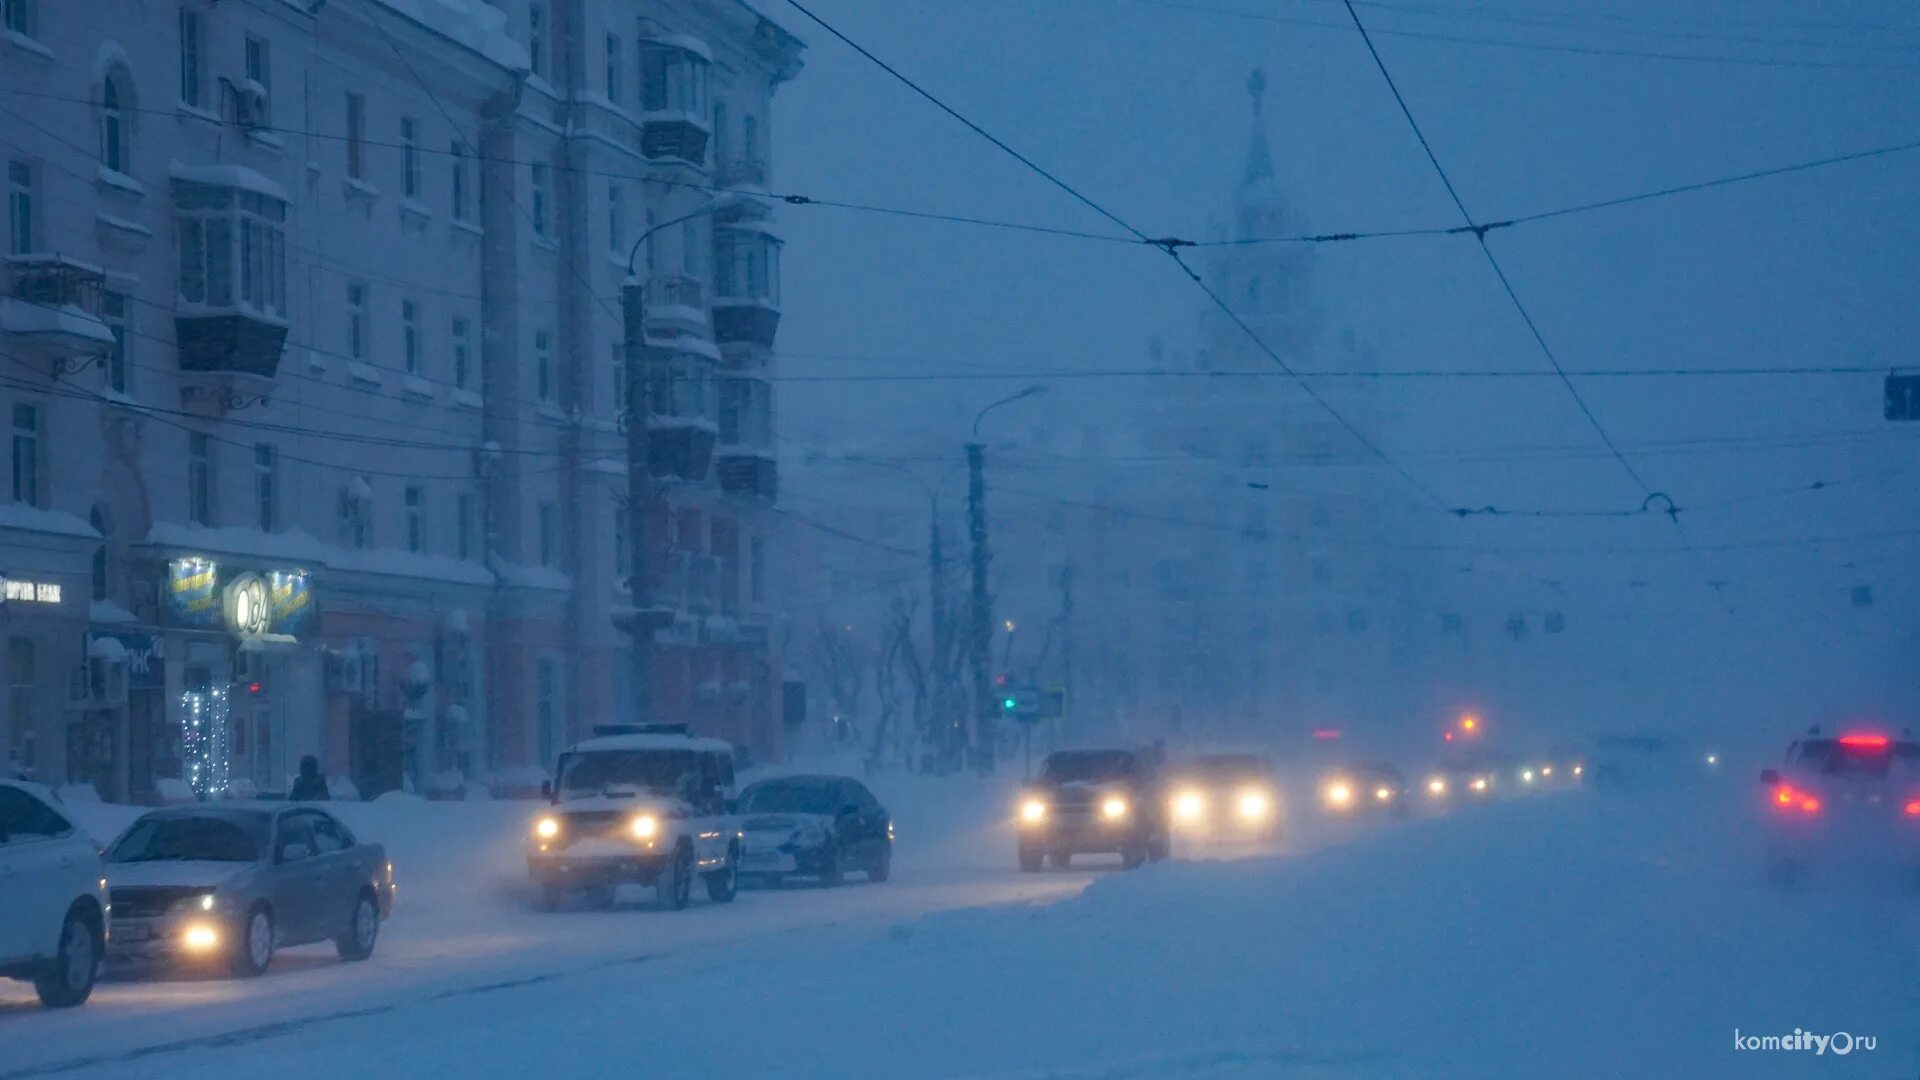 Комсомольск на Амуре снегопад 2014. Комсомольск на Амуре снегопад. Комсомольск-на-Амуре снегопад 2013. Комсомольск на Амуре зима 2013. 28 декабря 2014